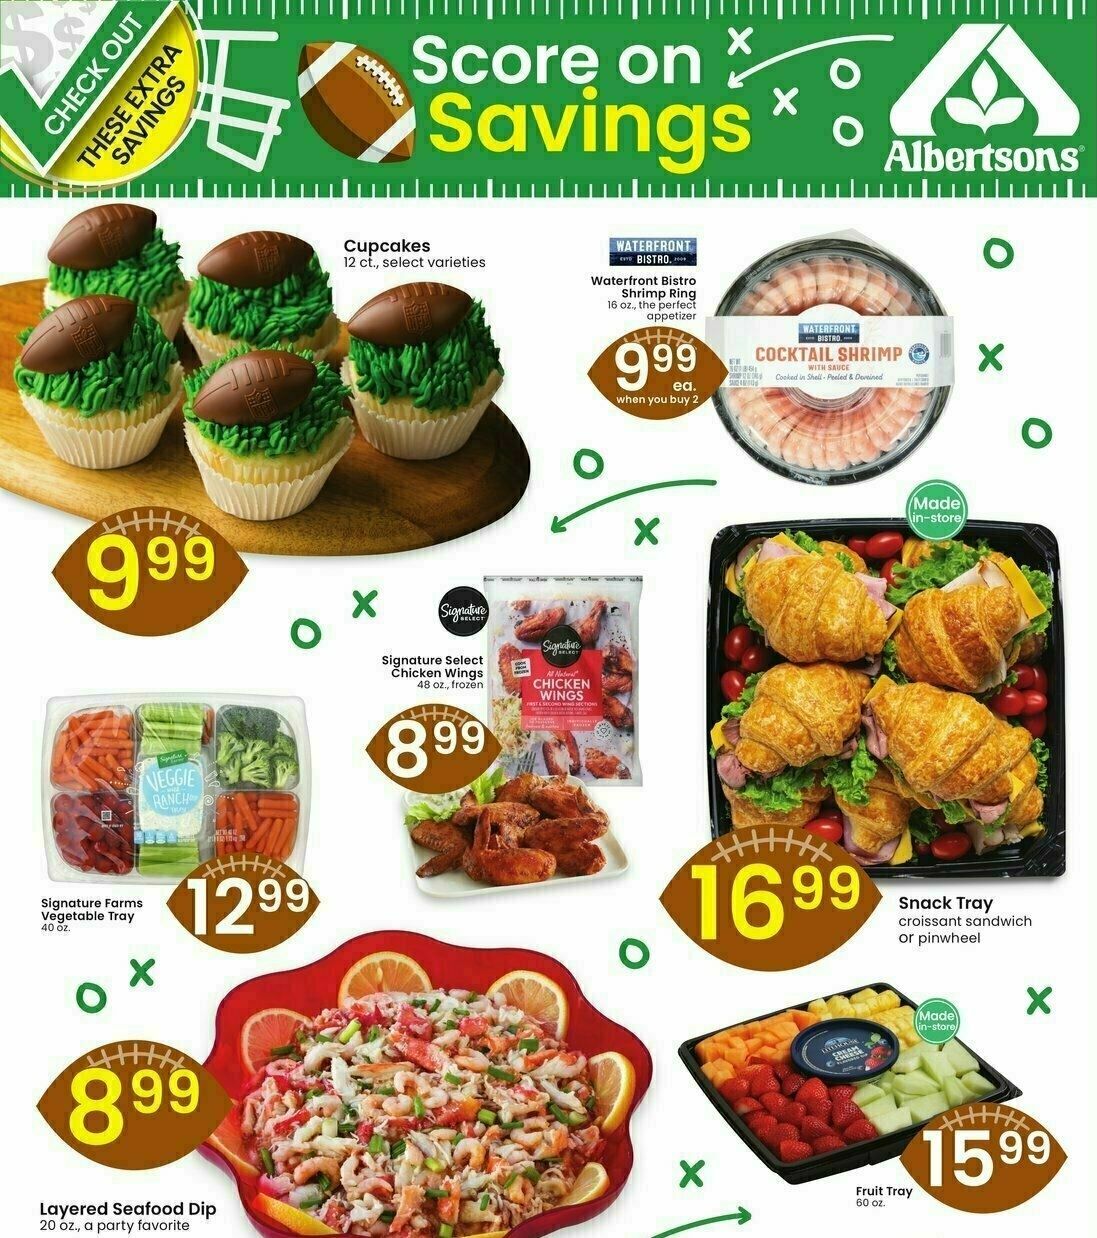 Albertsons Bonus Savings Weekly Ad from January 31